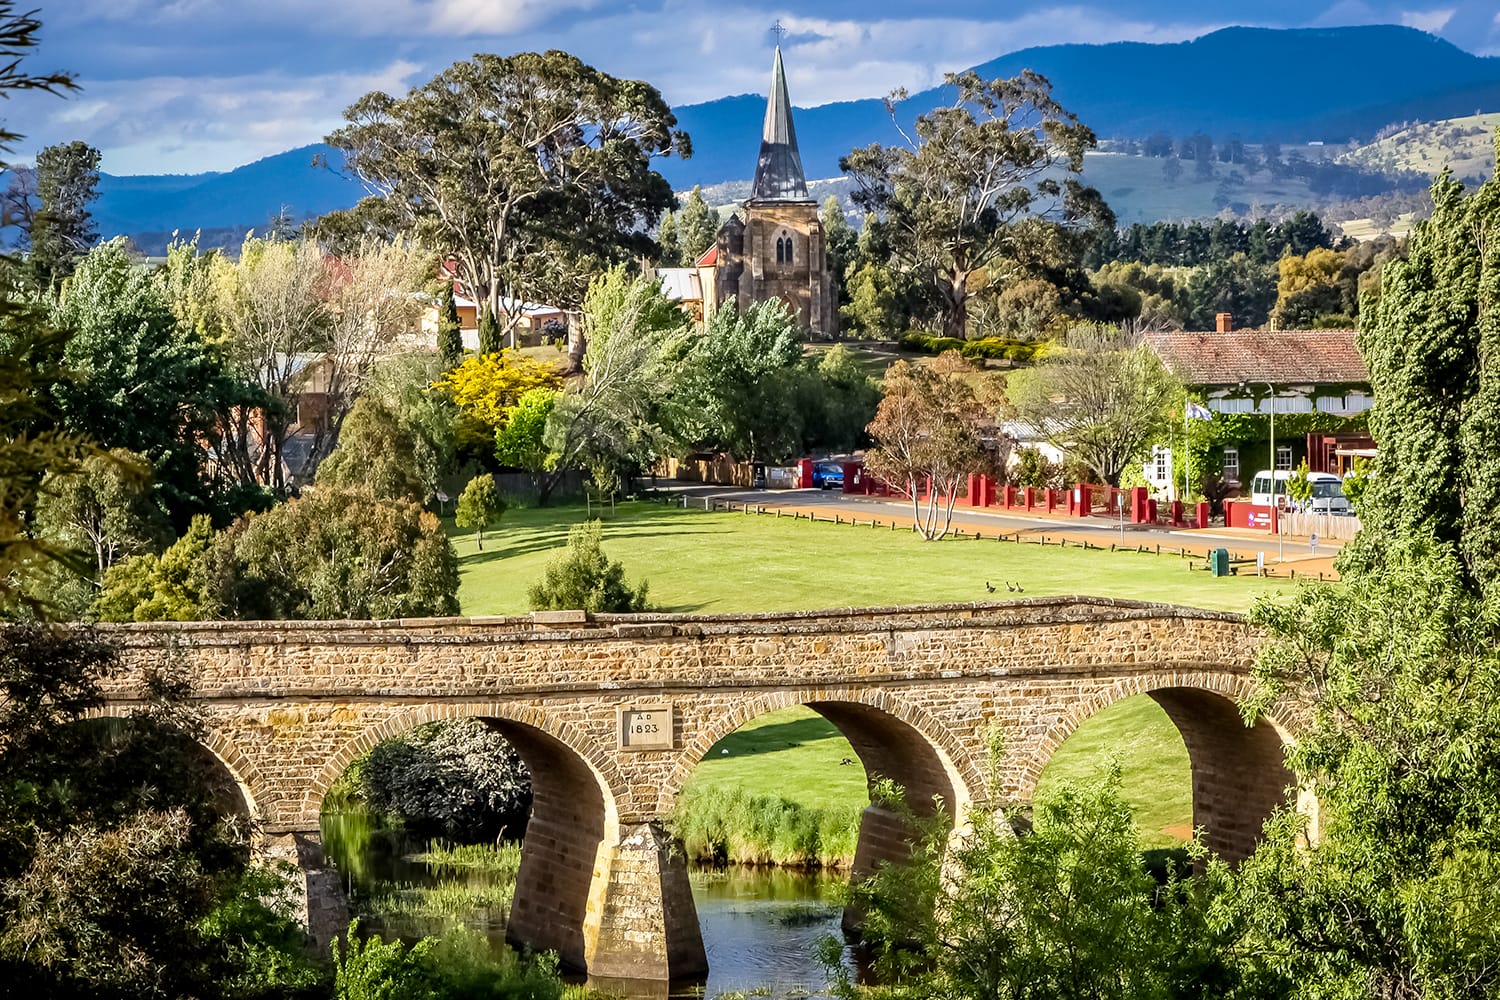 Bridge and townscape of Richmond in Tasmania, Australia